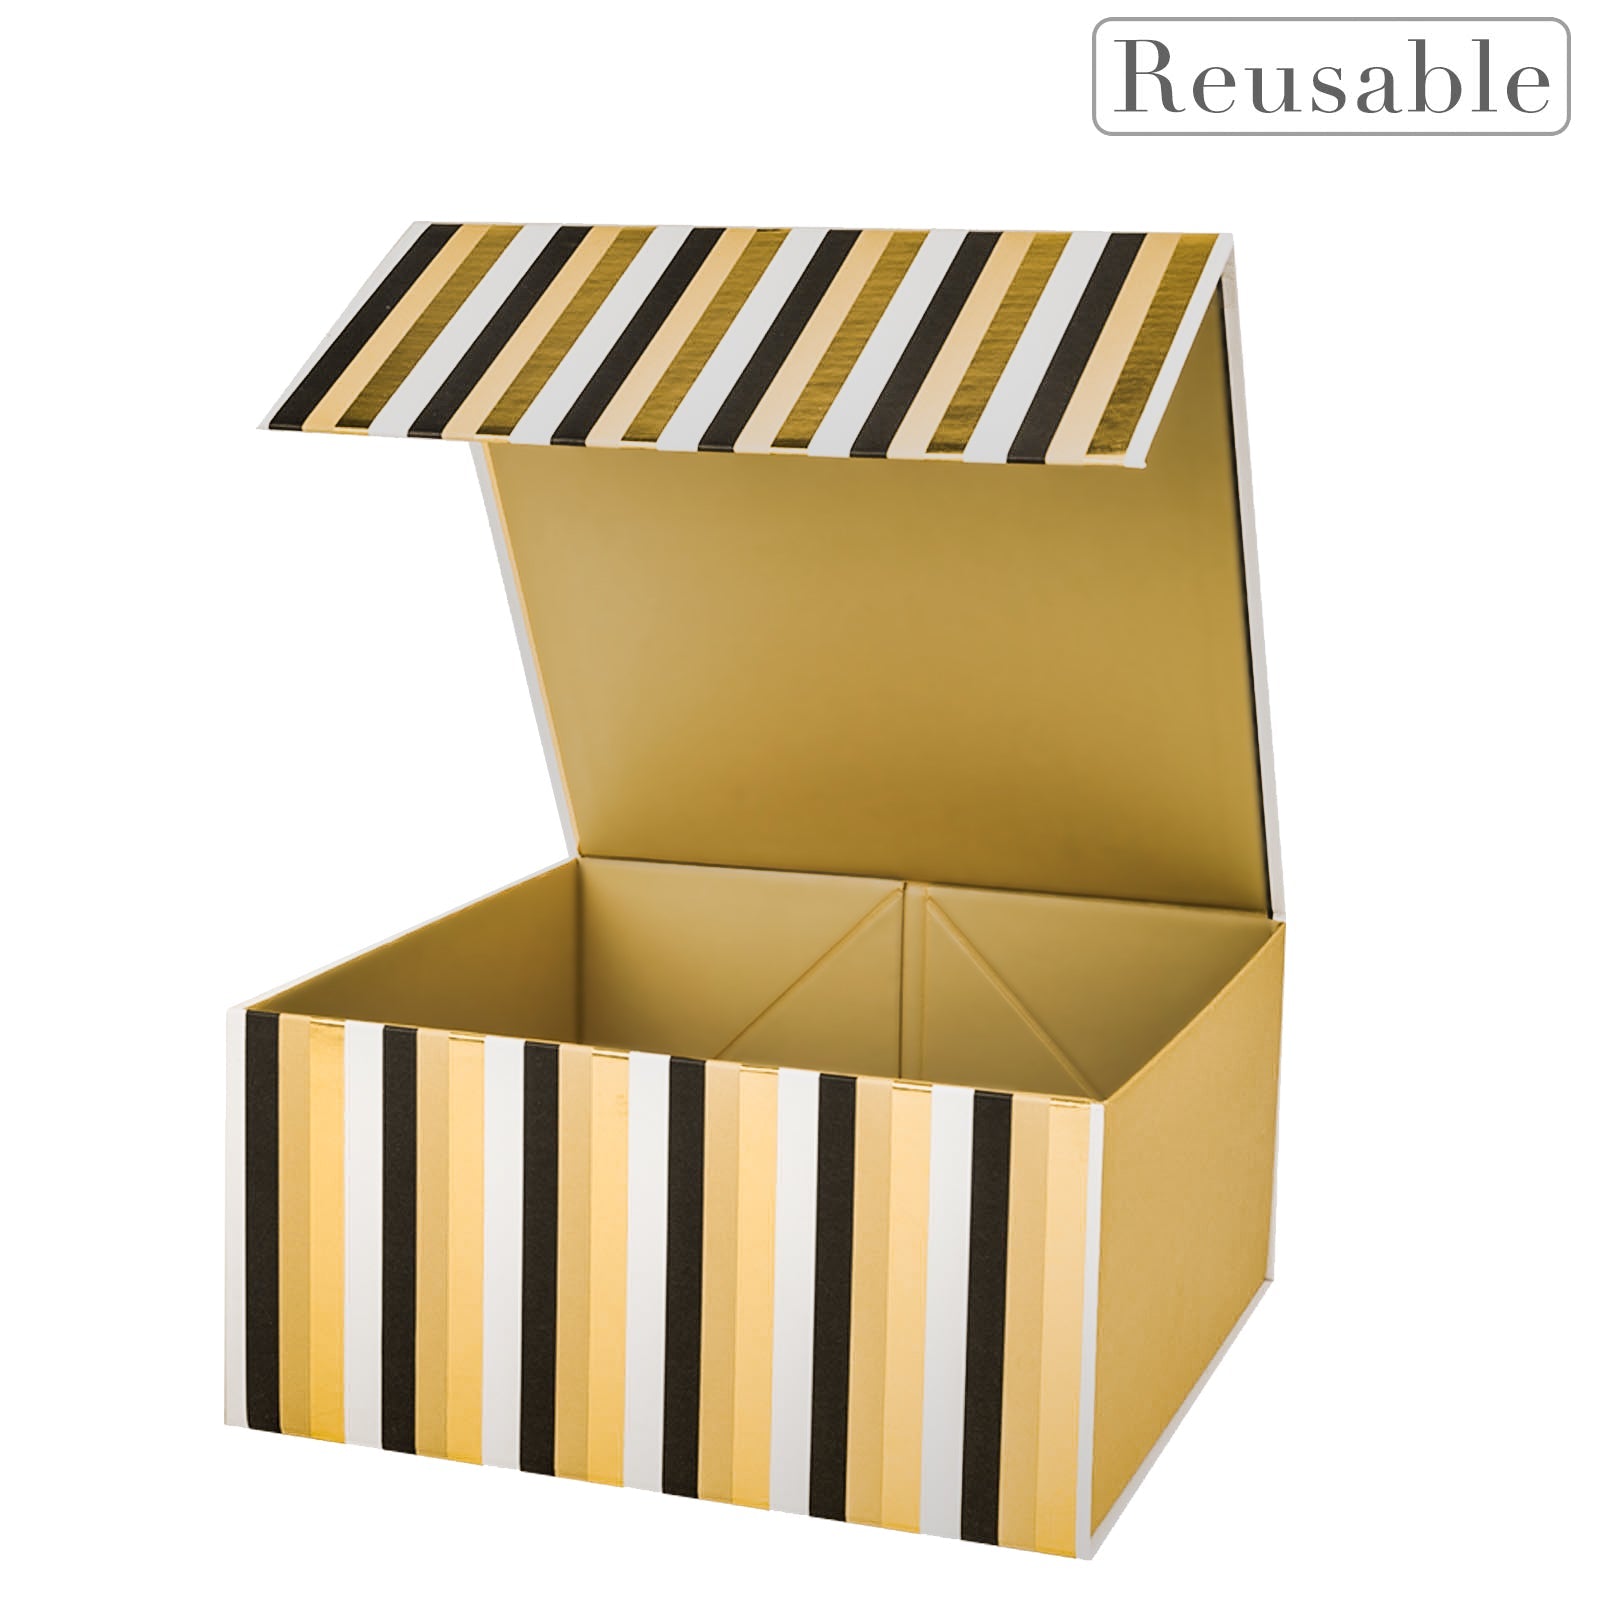 8x8x4 inch Magnetic Closure Box Classic Stripes